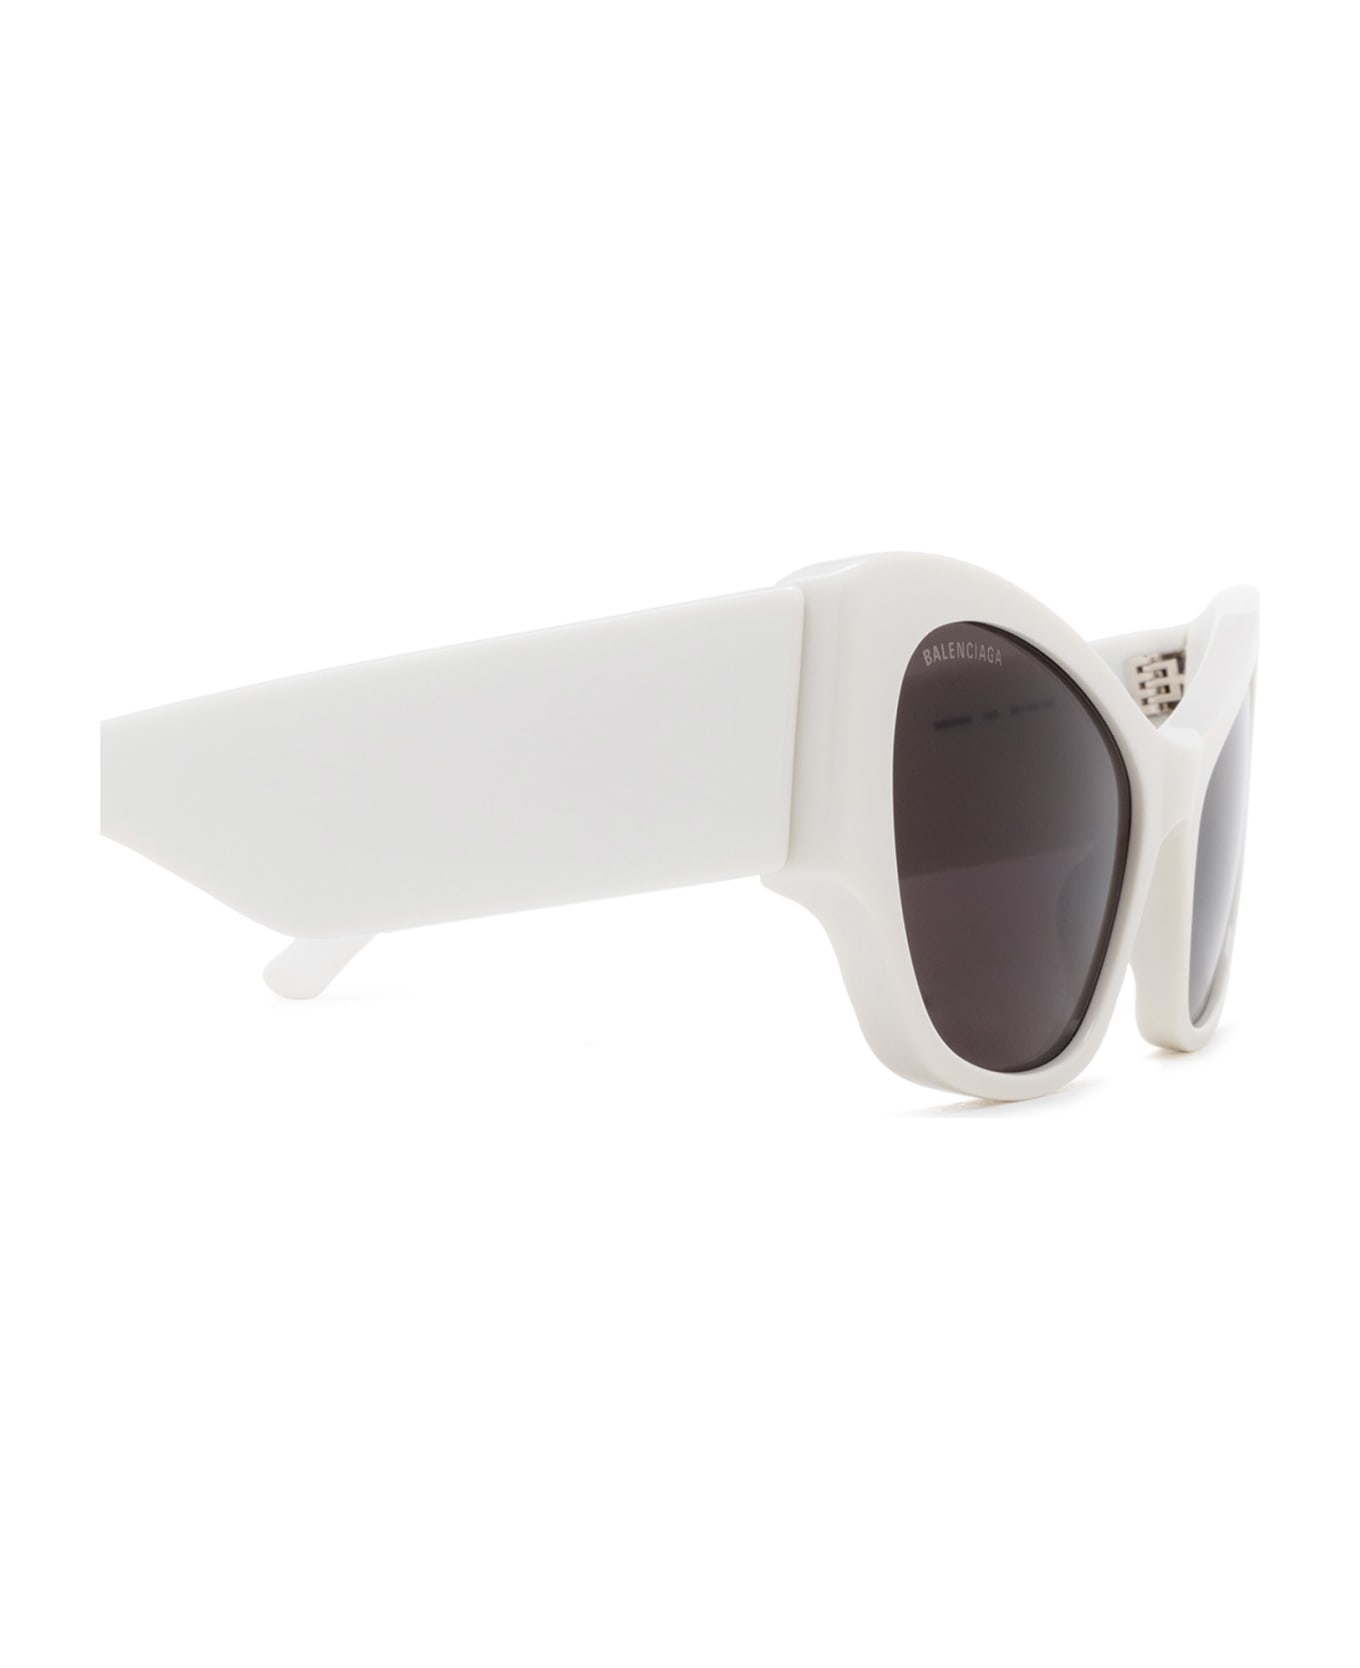 Balenciaga Eyewear Bb0259s Sunglasses - White サングラス